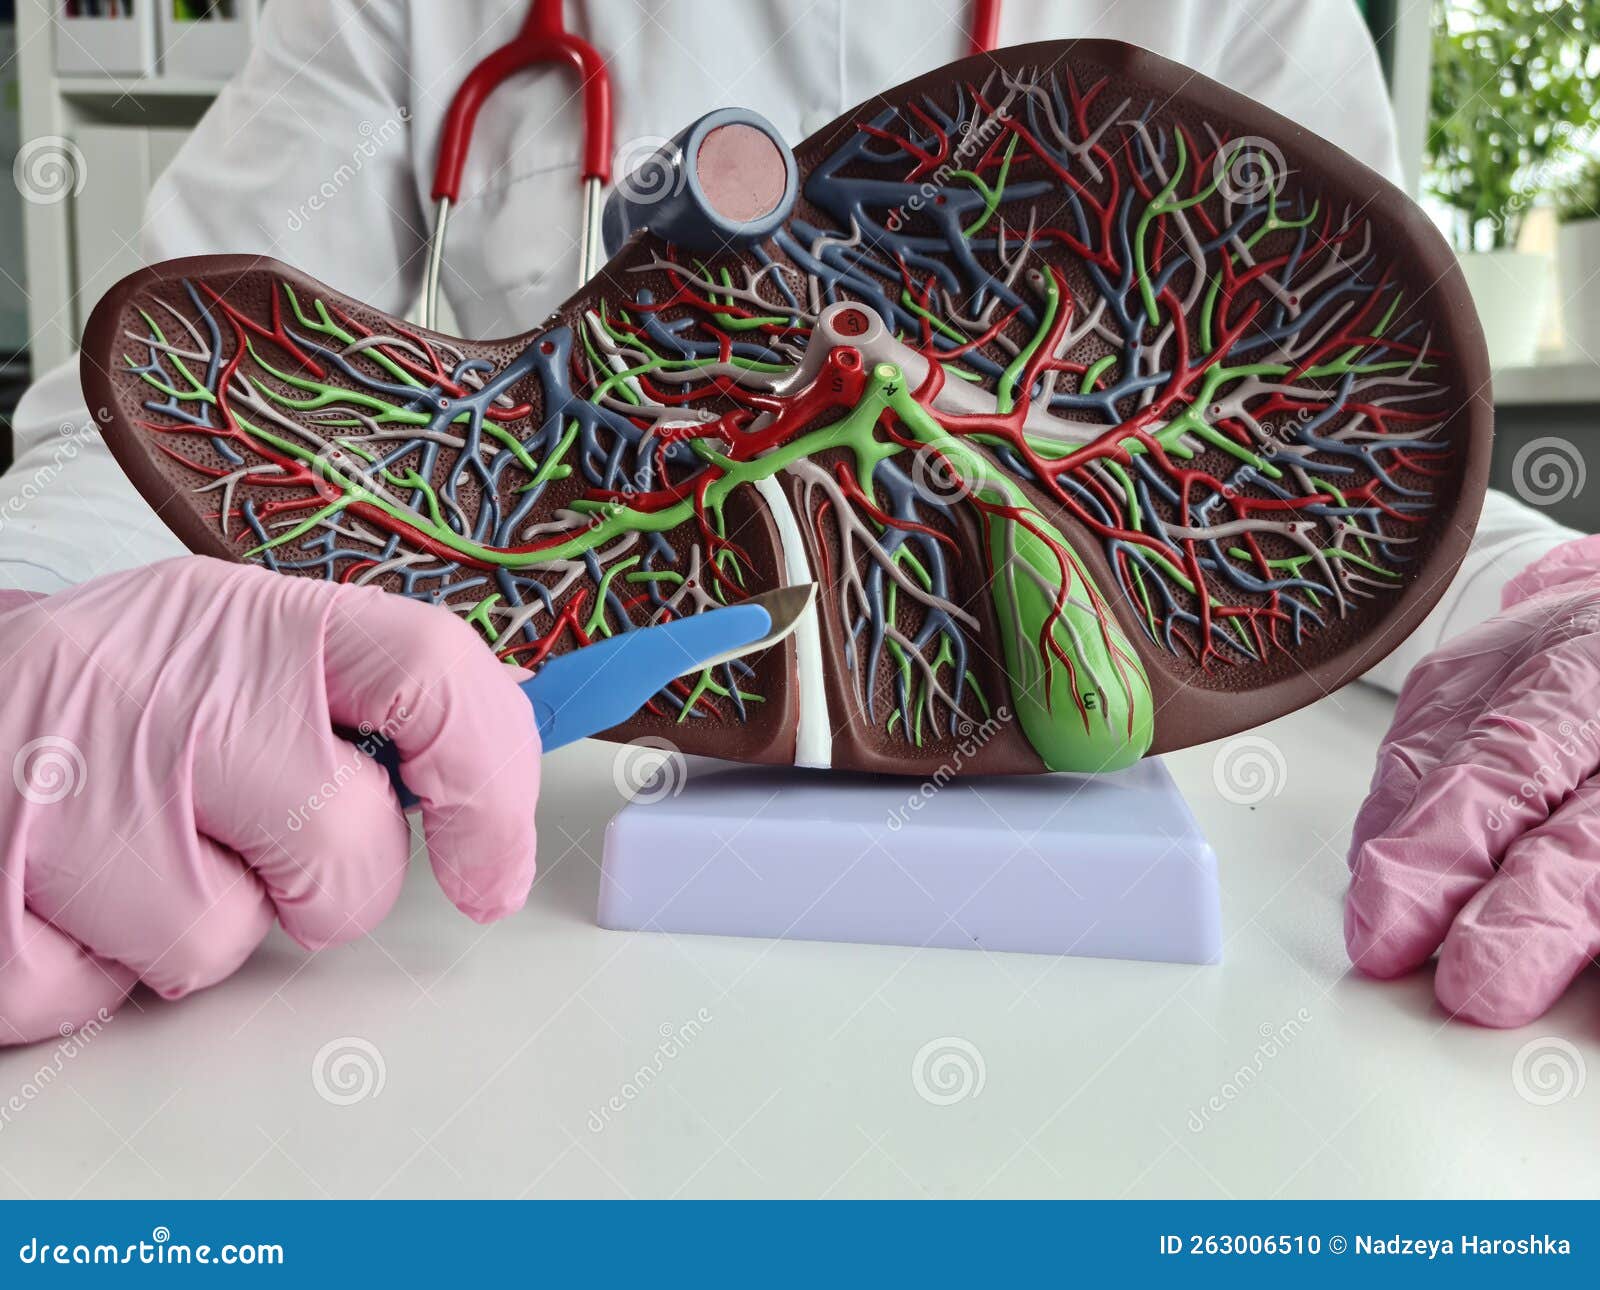 human liver model fibrous cirrhotic and cancerous